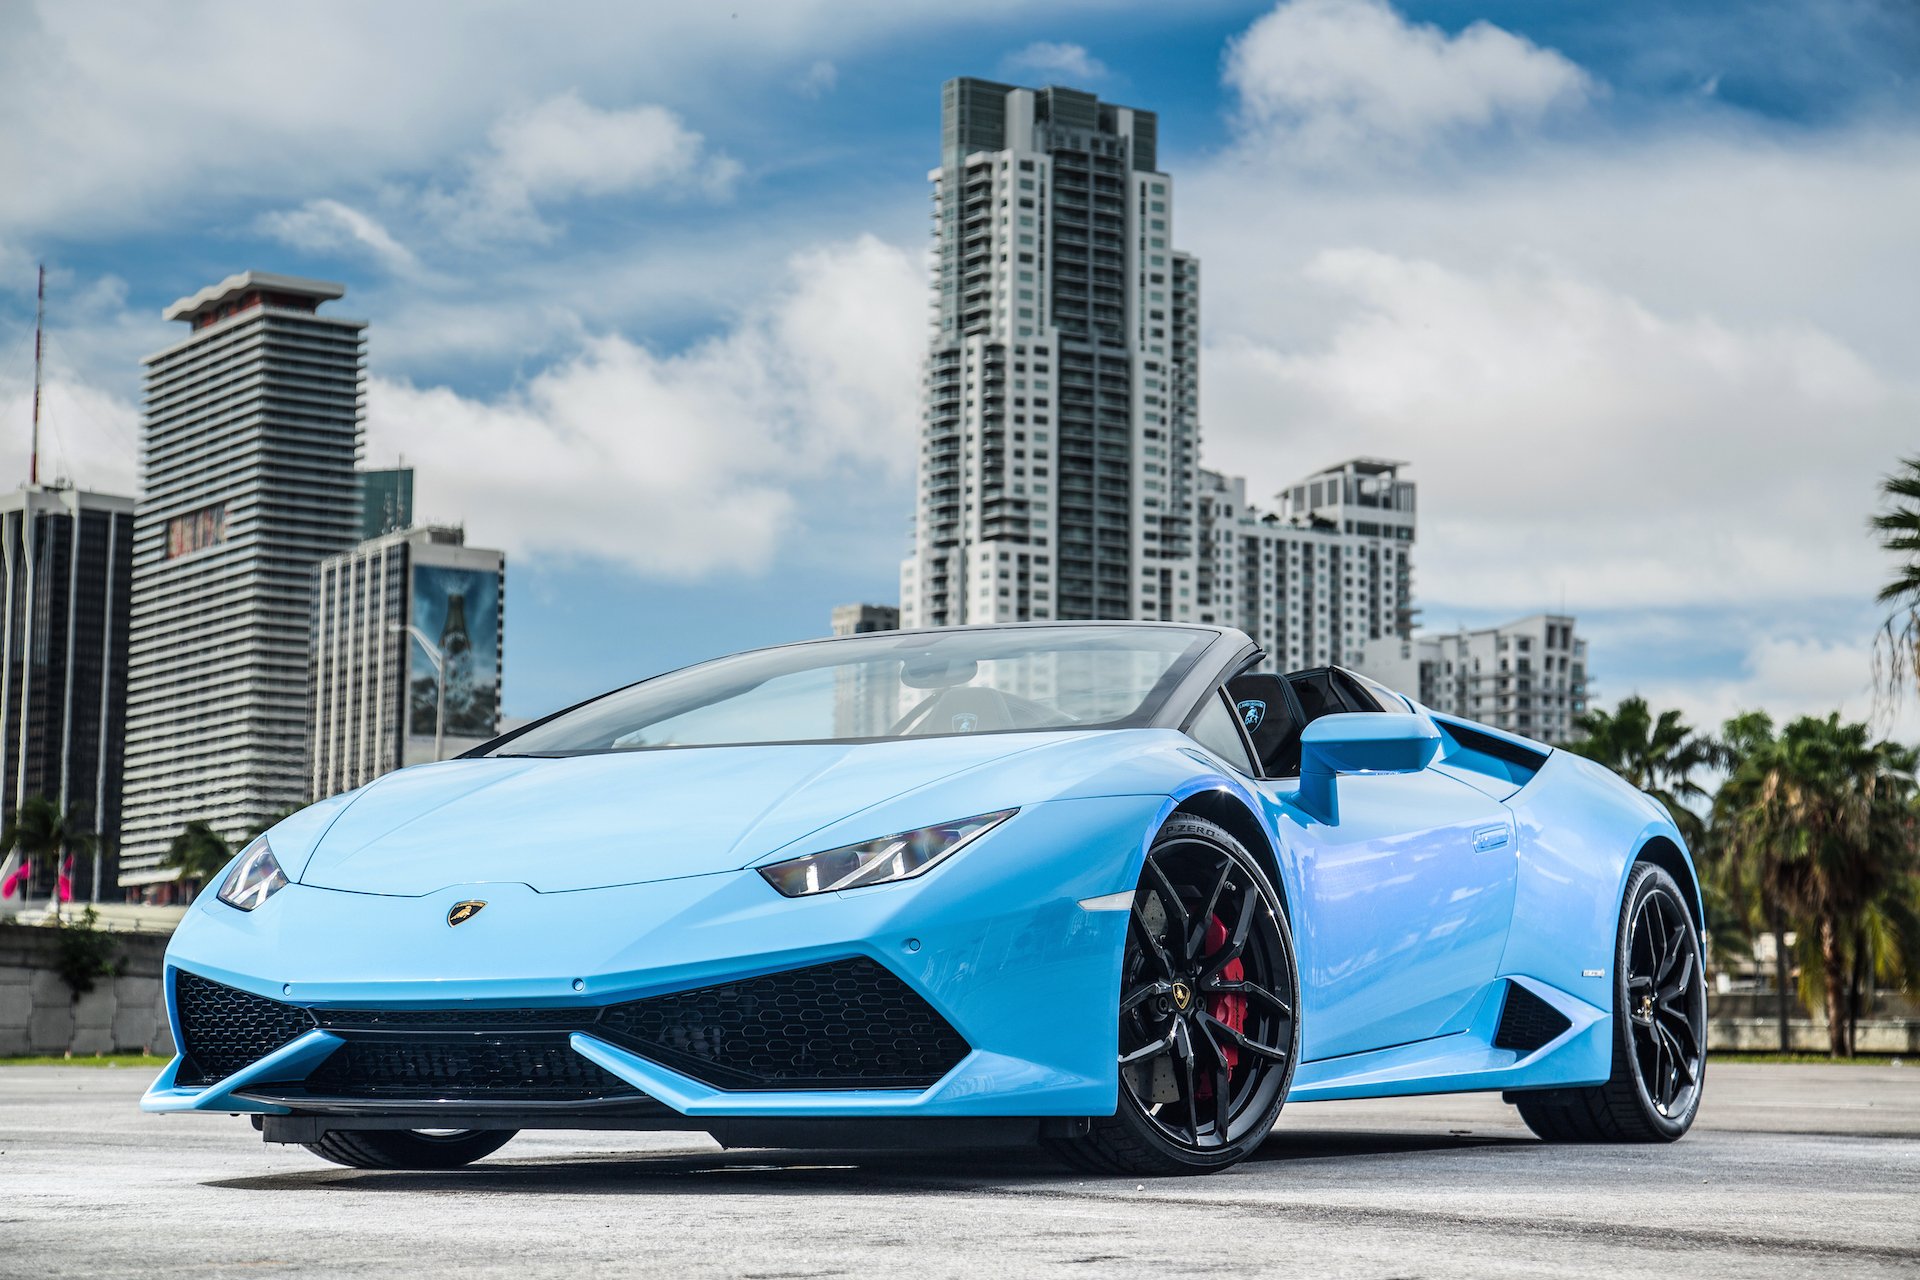 2016 Lamborghini Huracan Cars Blue Spyder Wallpapers Hd Desktop